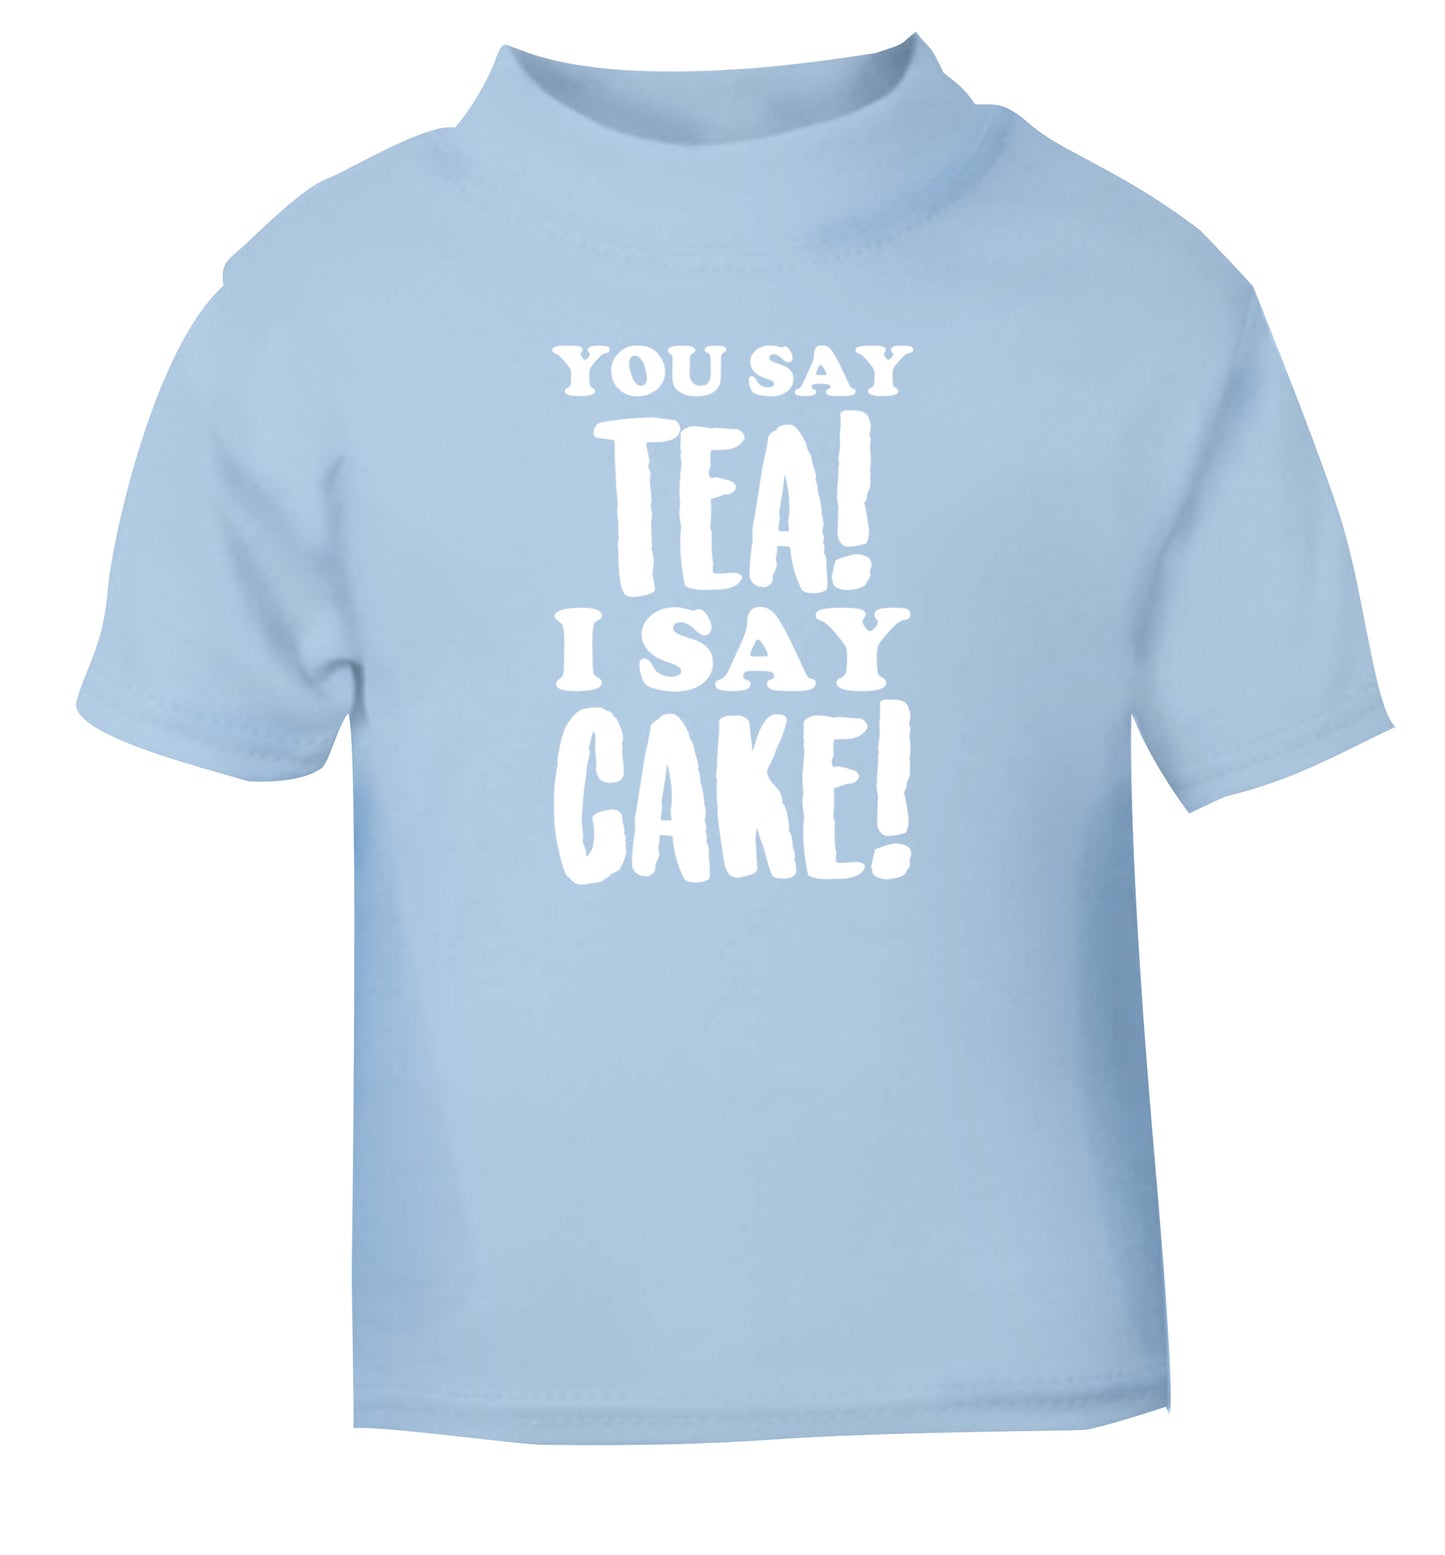 You say tea I say cake! light blue Baby Toddler Tshirt 2 Years